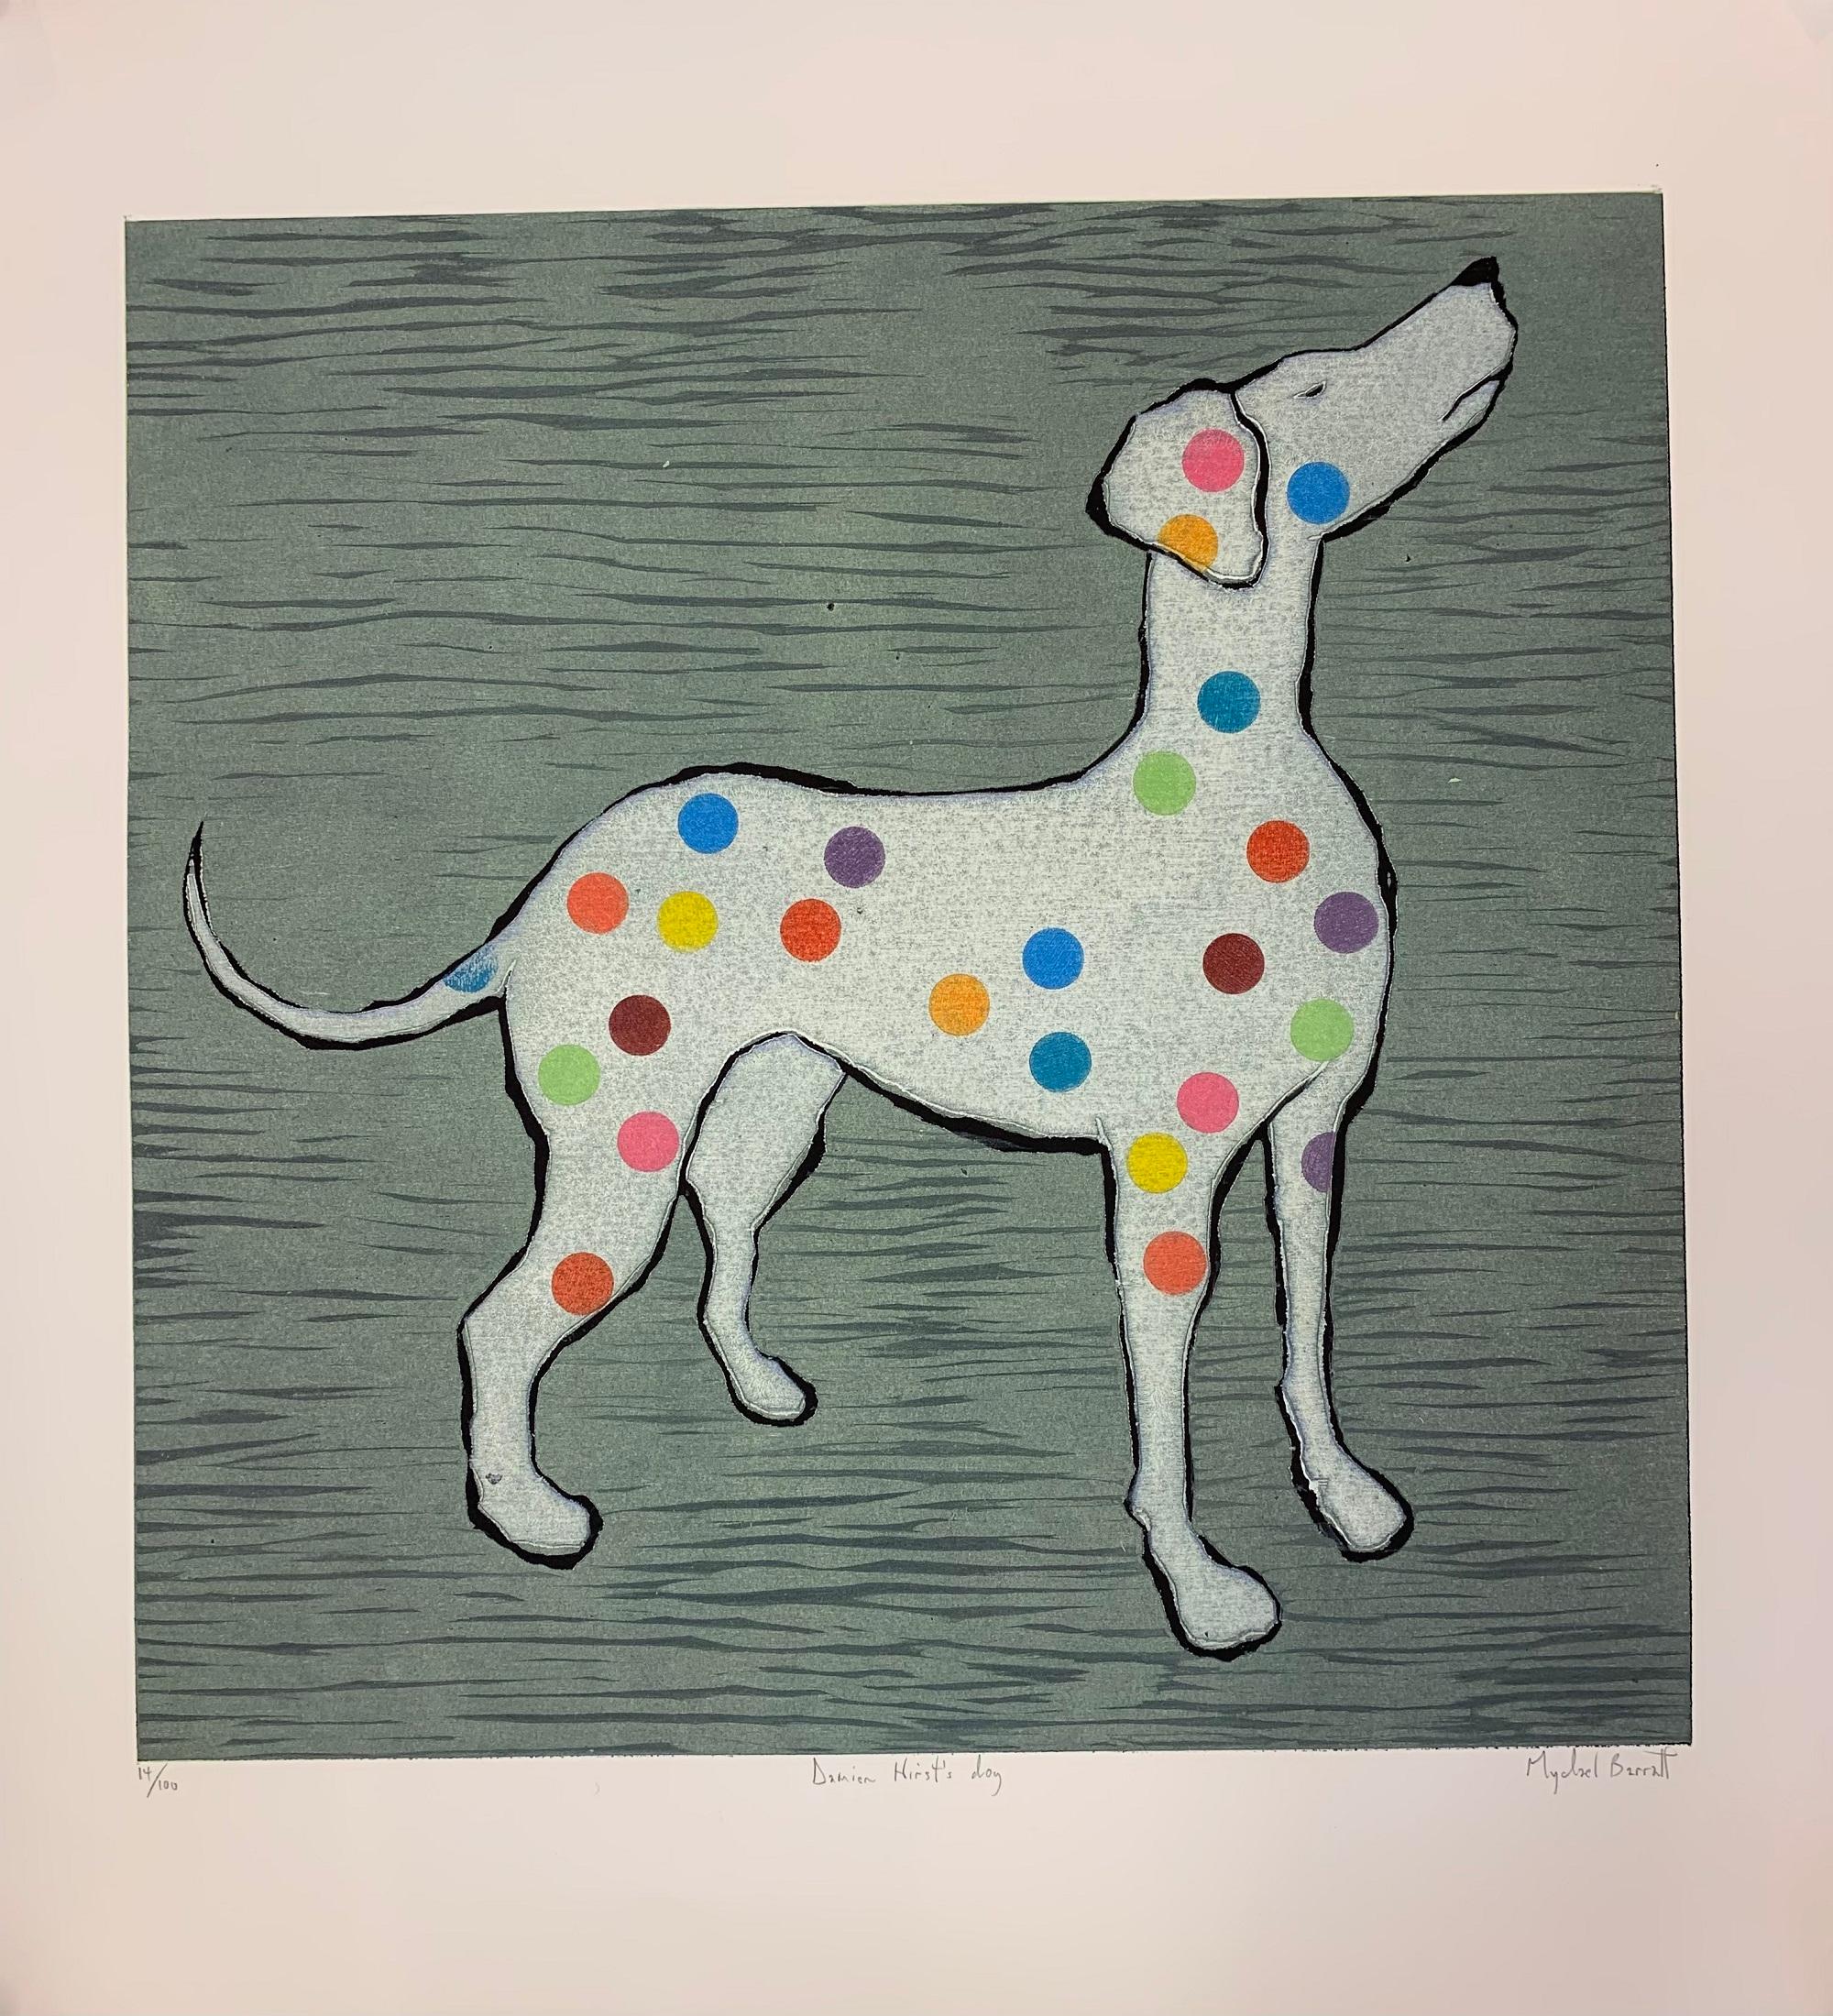 Damien Hirst's Dog - Print by Mychael Barratt